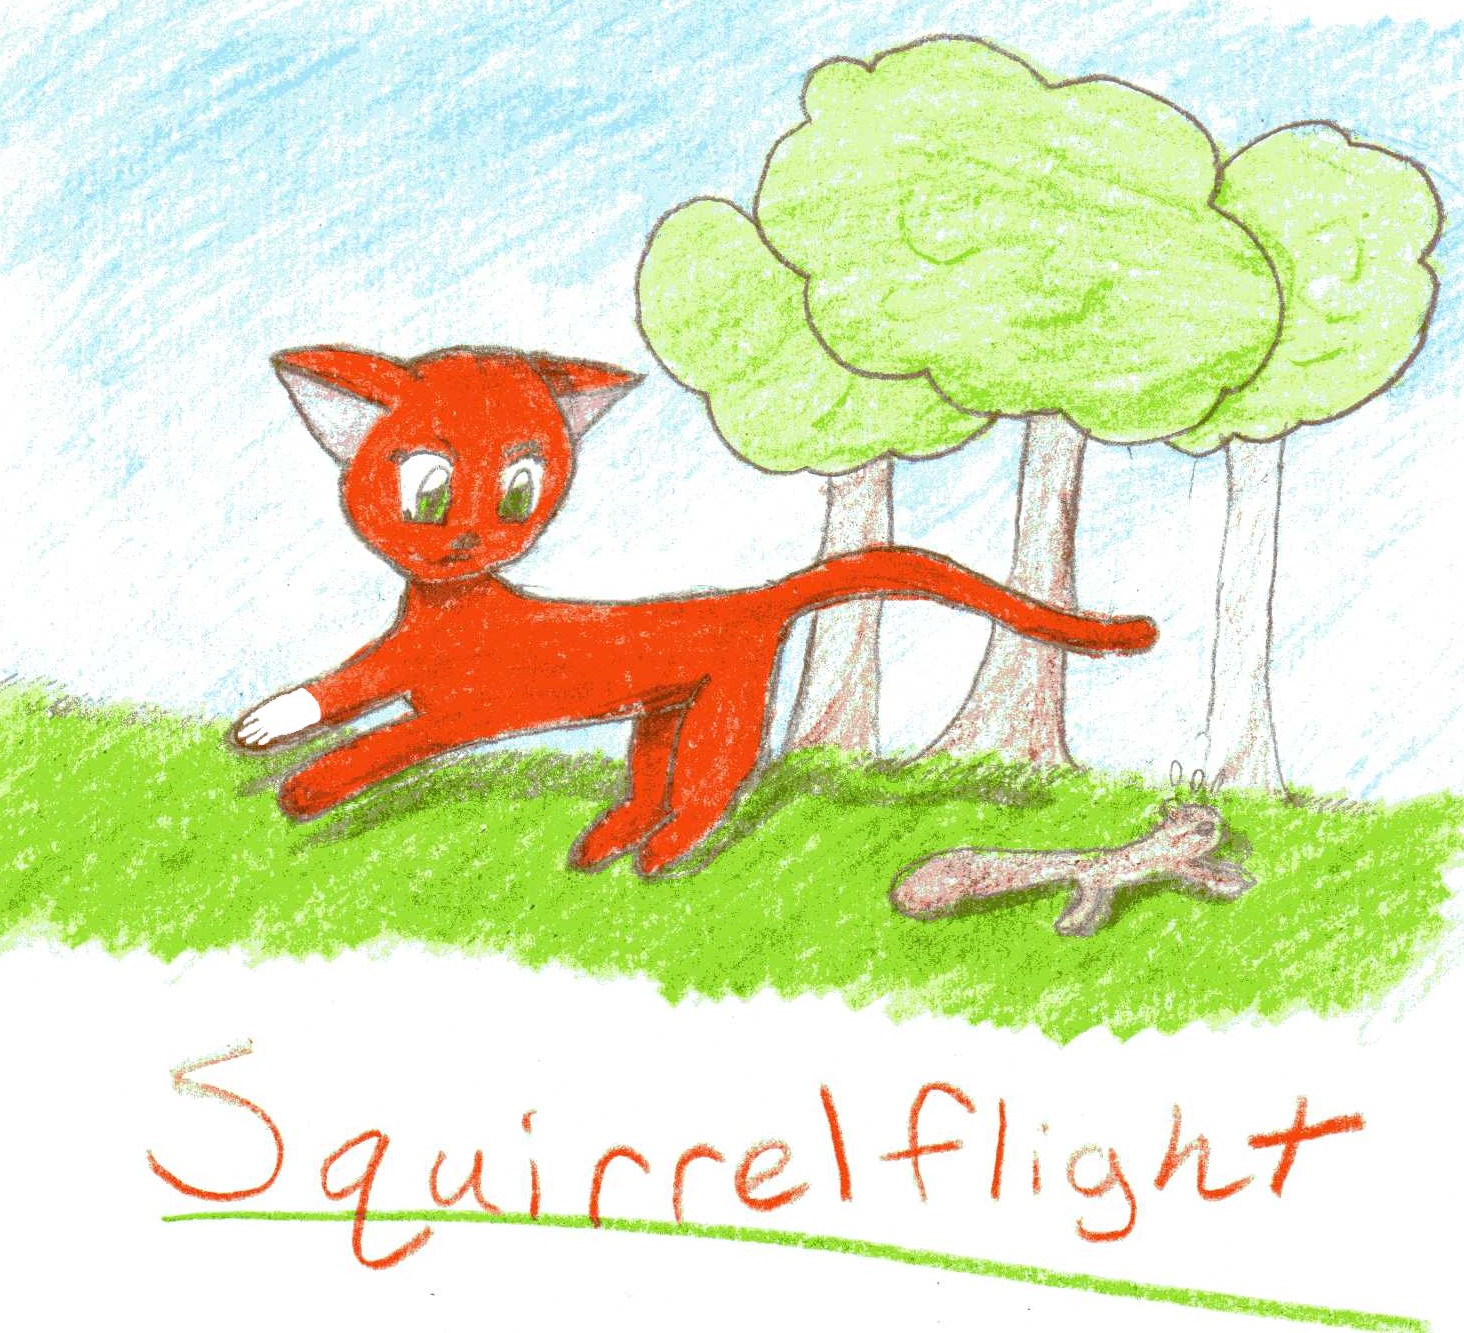 Squirrelflight by mewblueberry